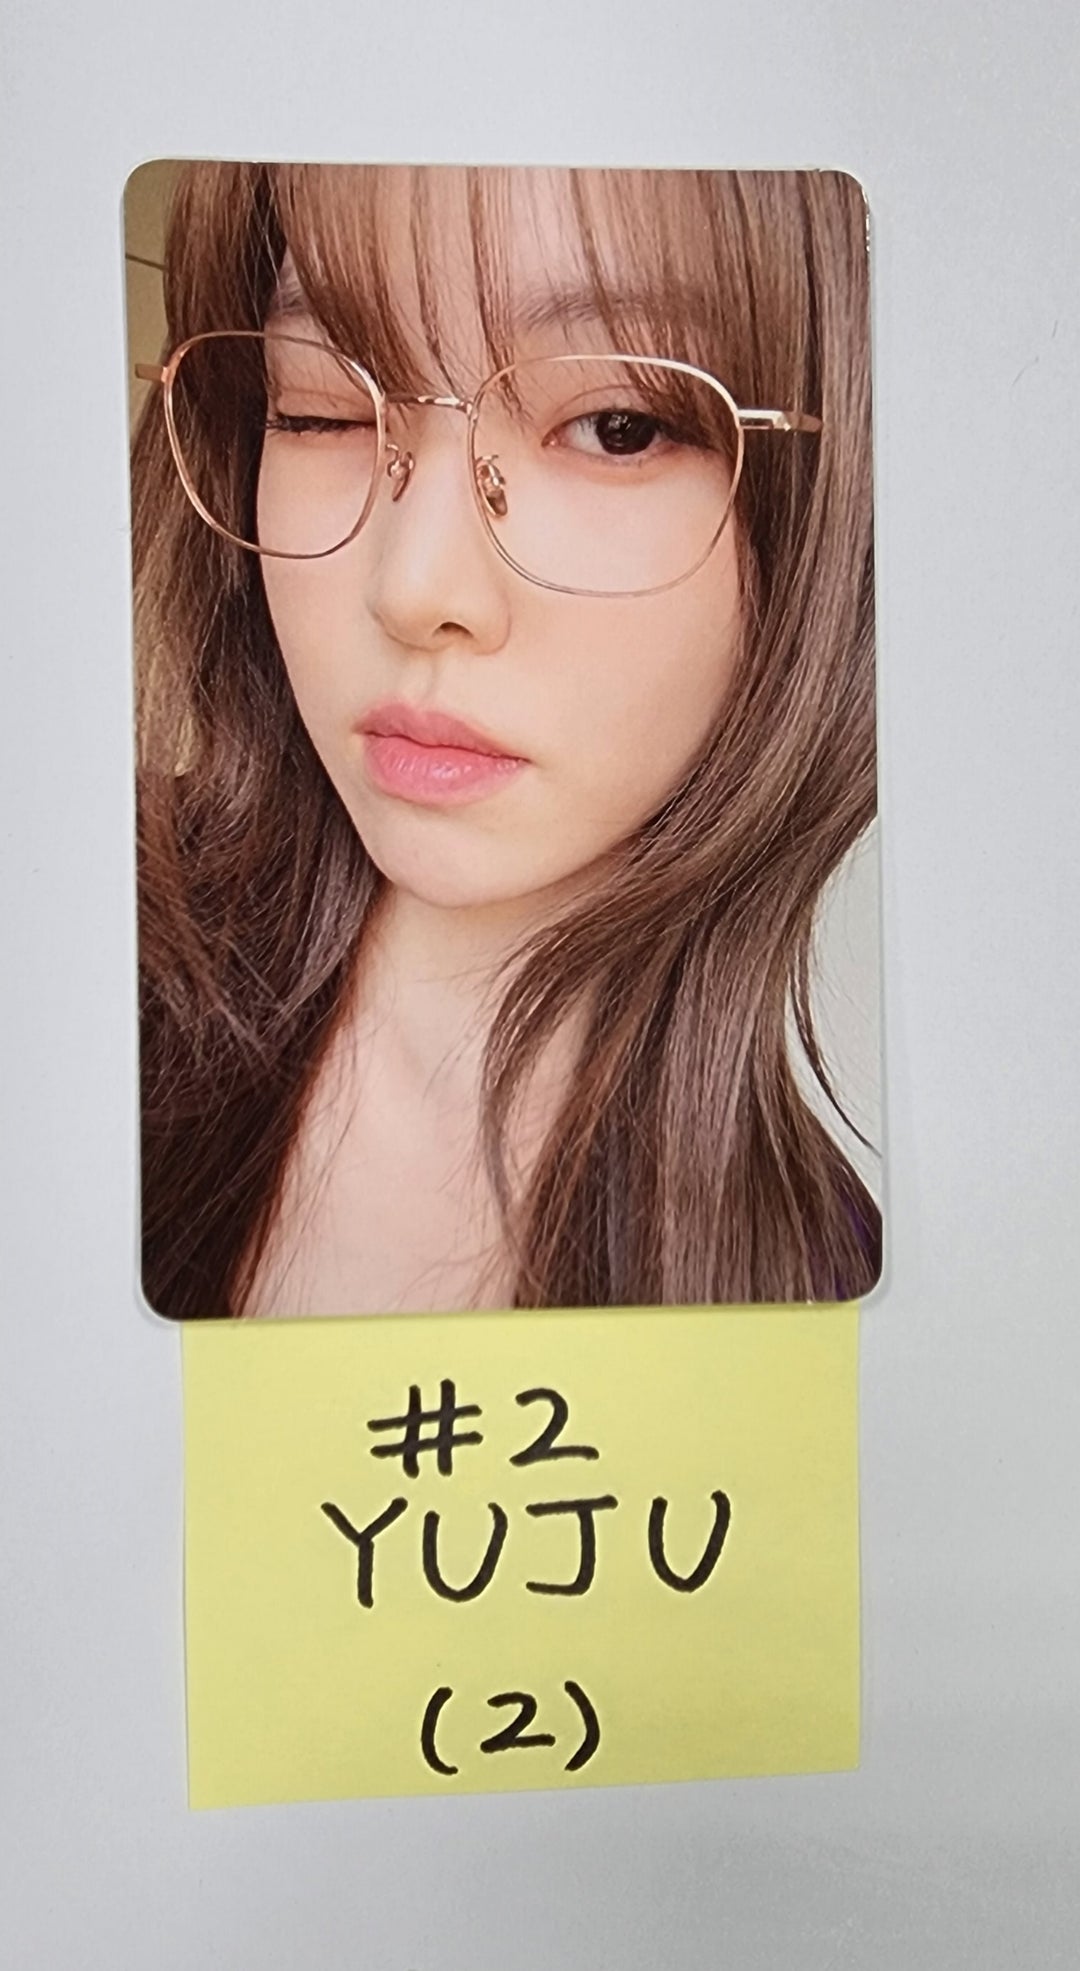 YUJU (Of 여자친구) "O" - 공식 포토카드